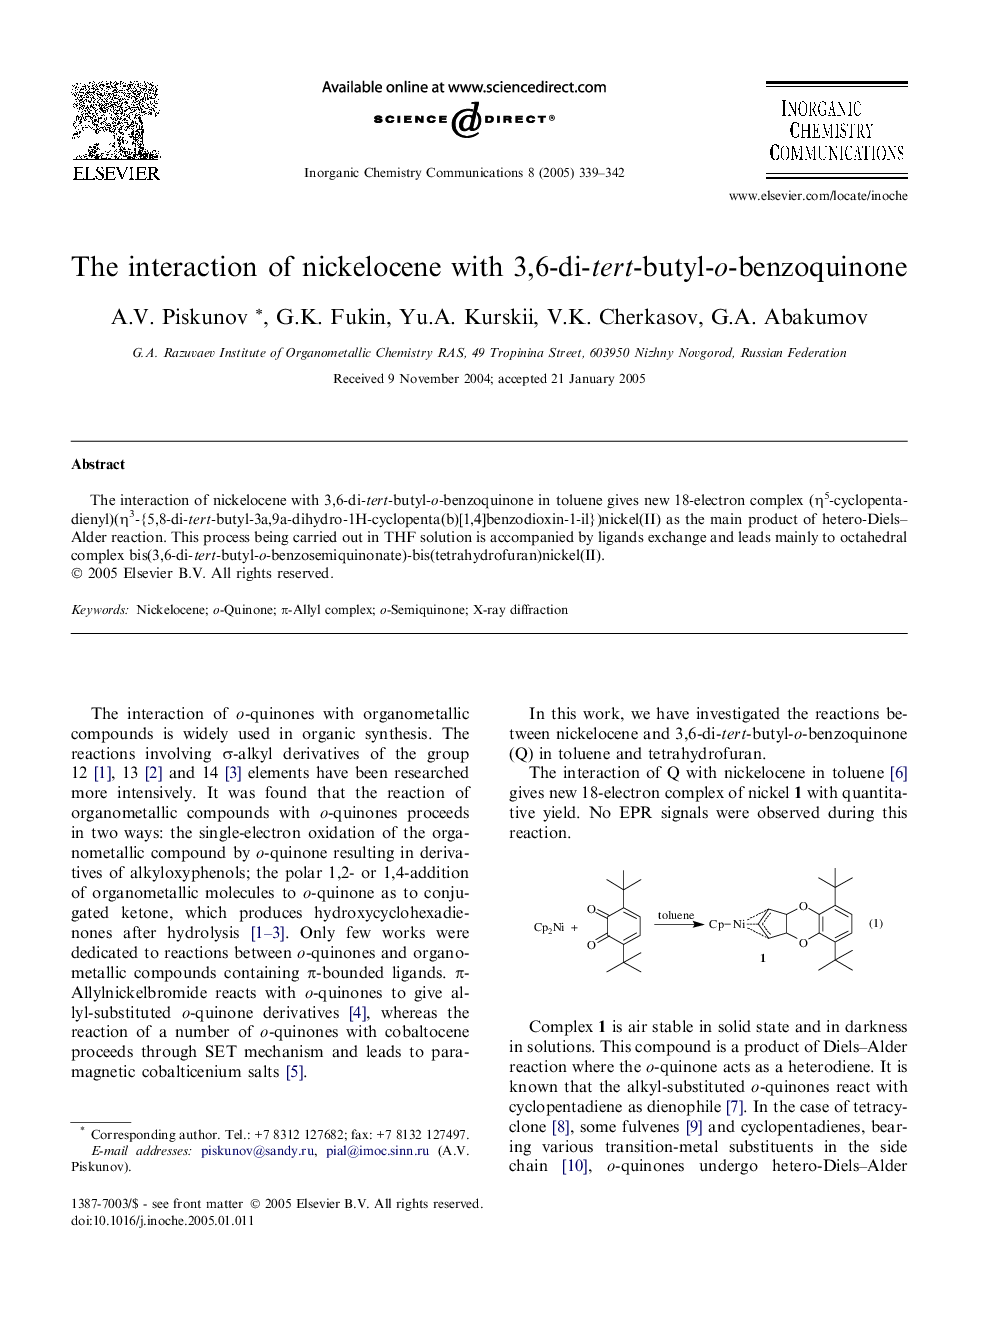 The interaction of nickelocene with 3,6-di-tert-butyl-o-benzoquinone